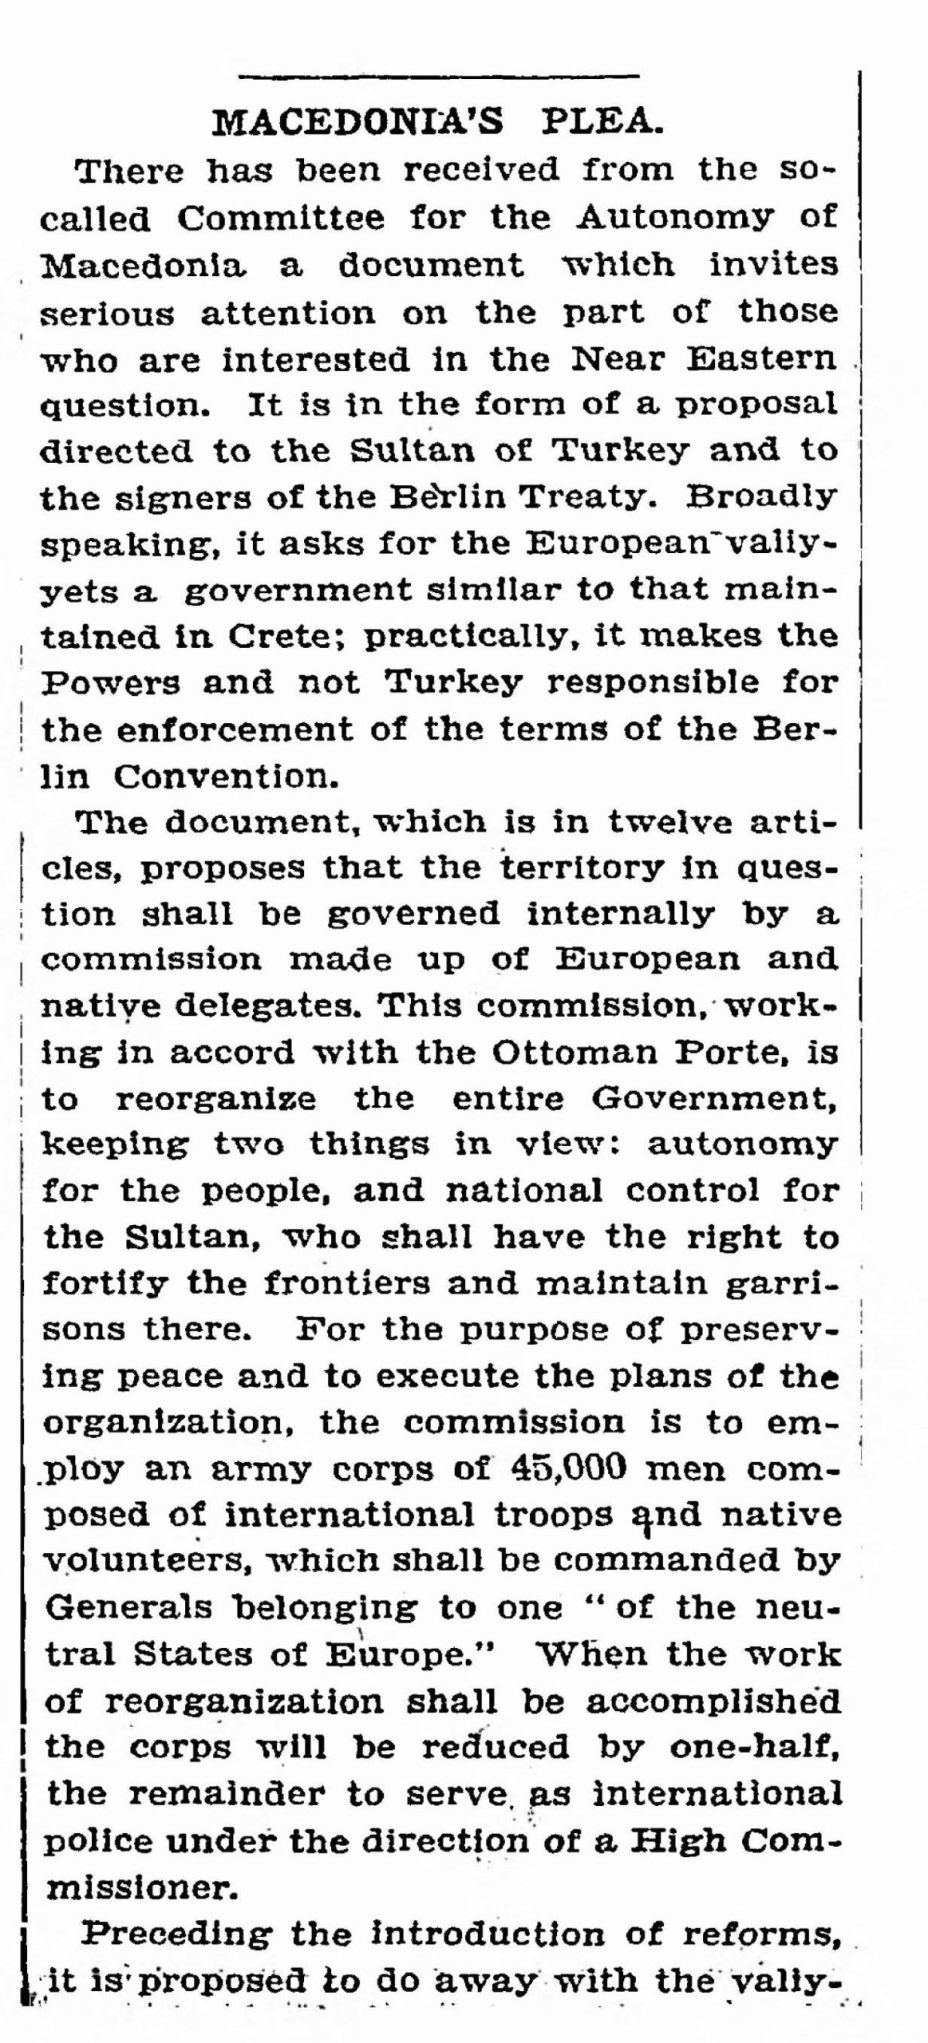 1903.09.13_The New York Times - Macedonian Plea